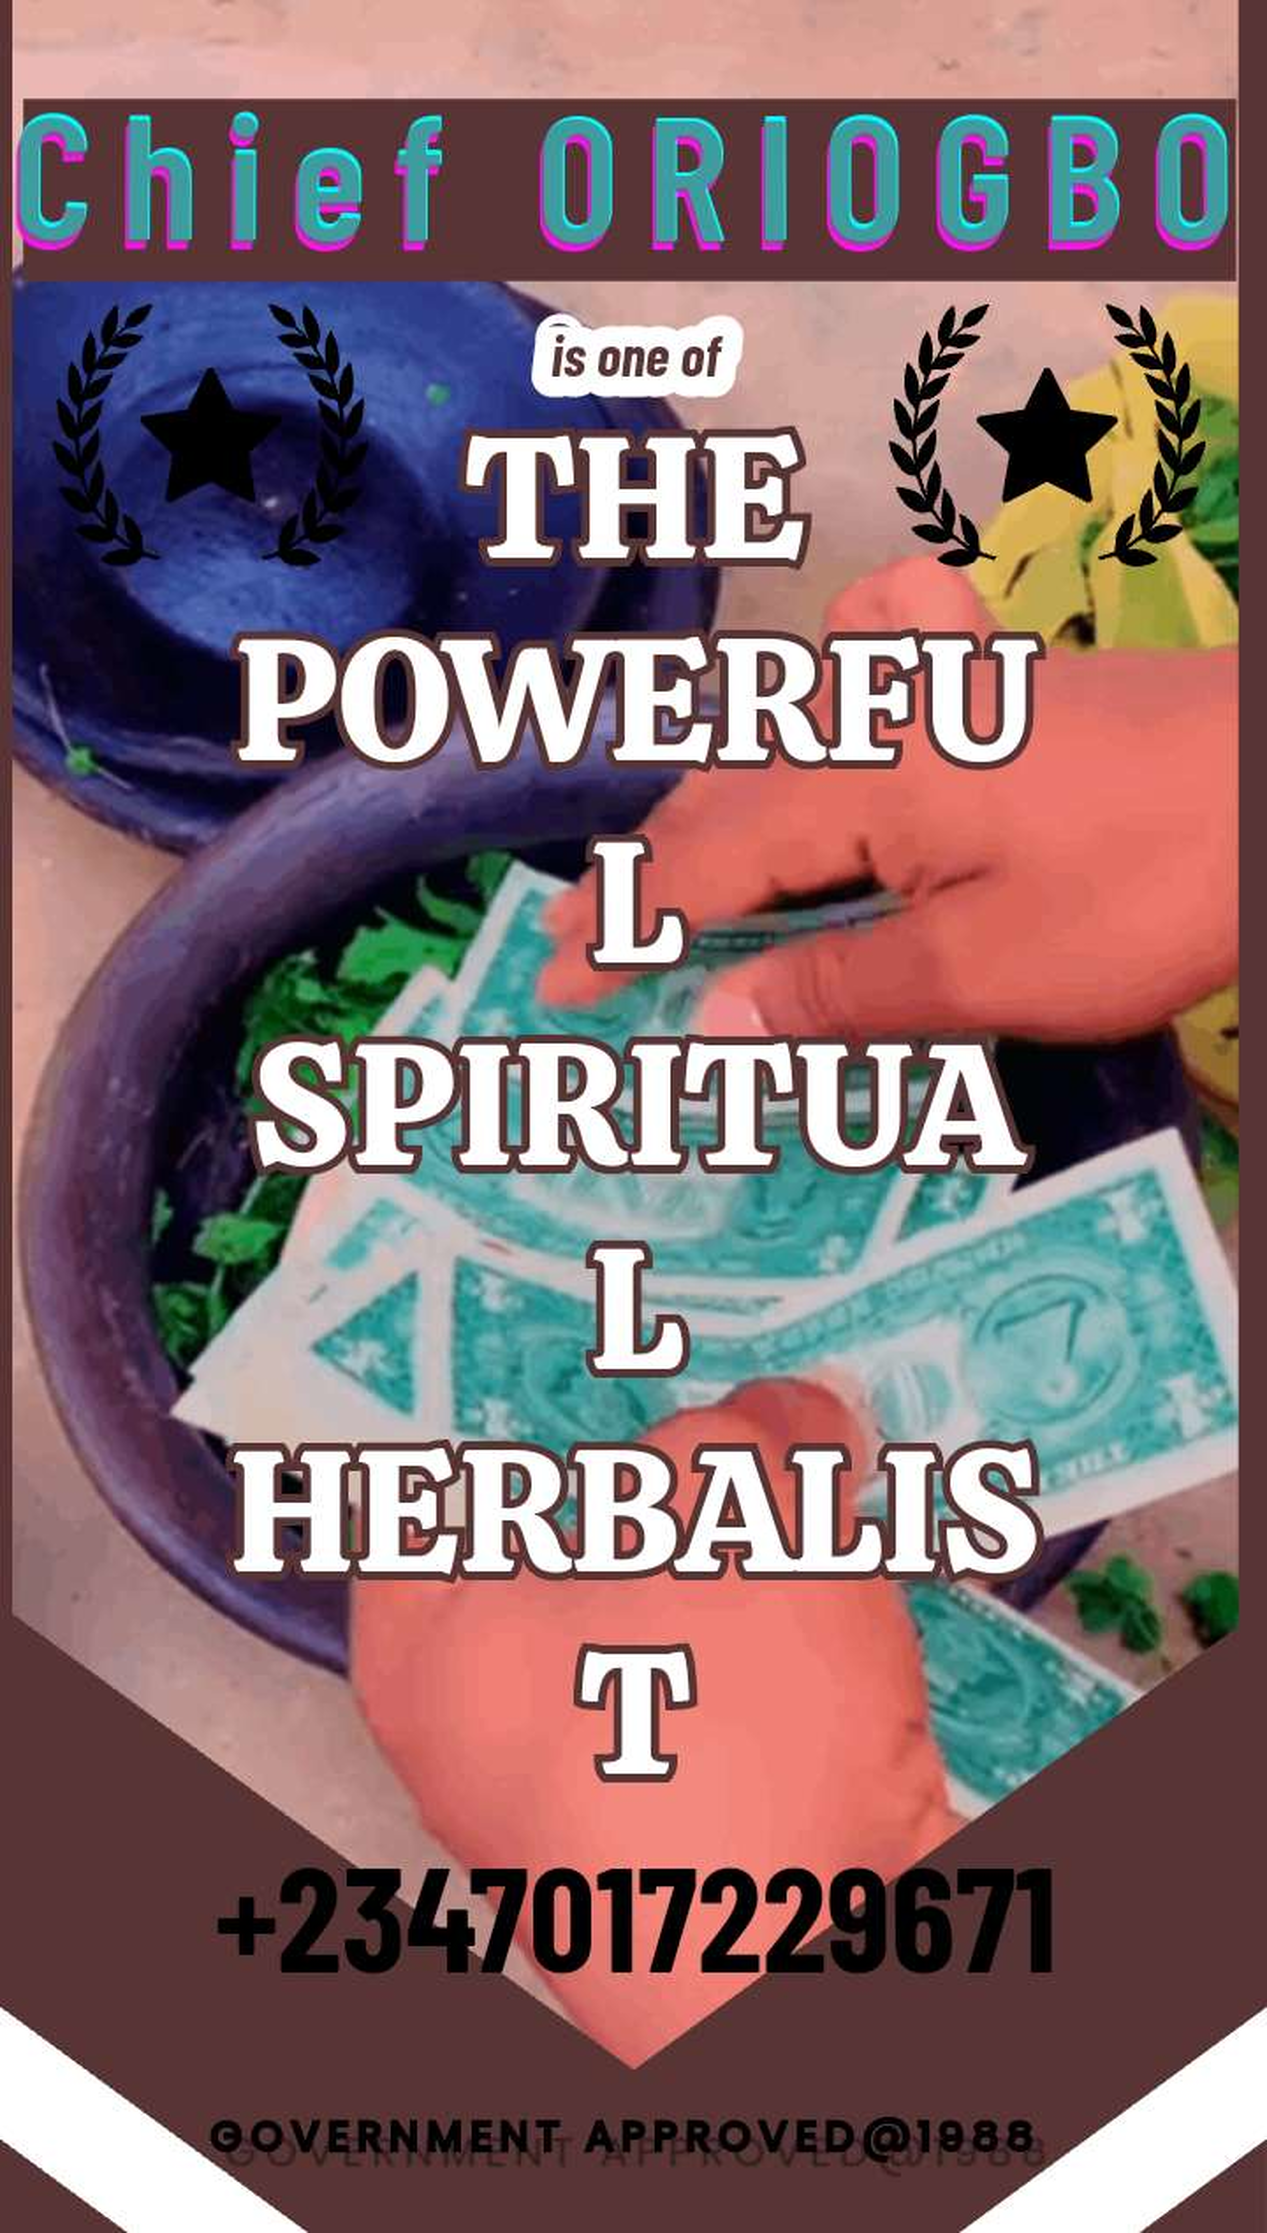 The best powerful spiritual herbalist in Nigeria +2347017229671